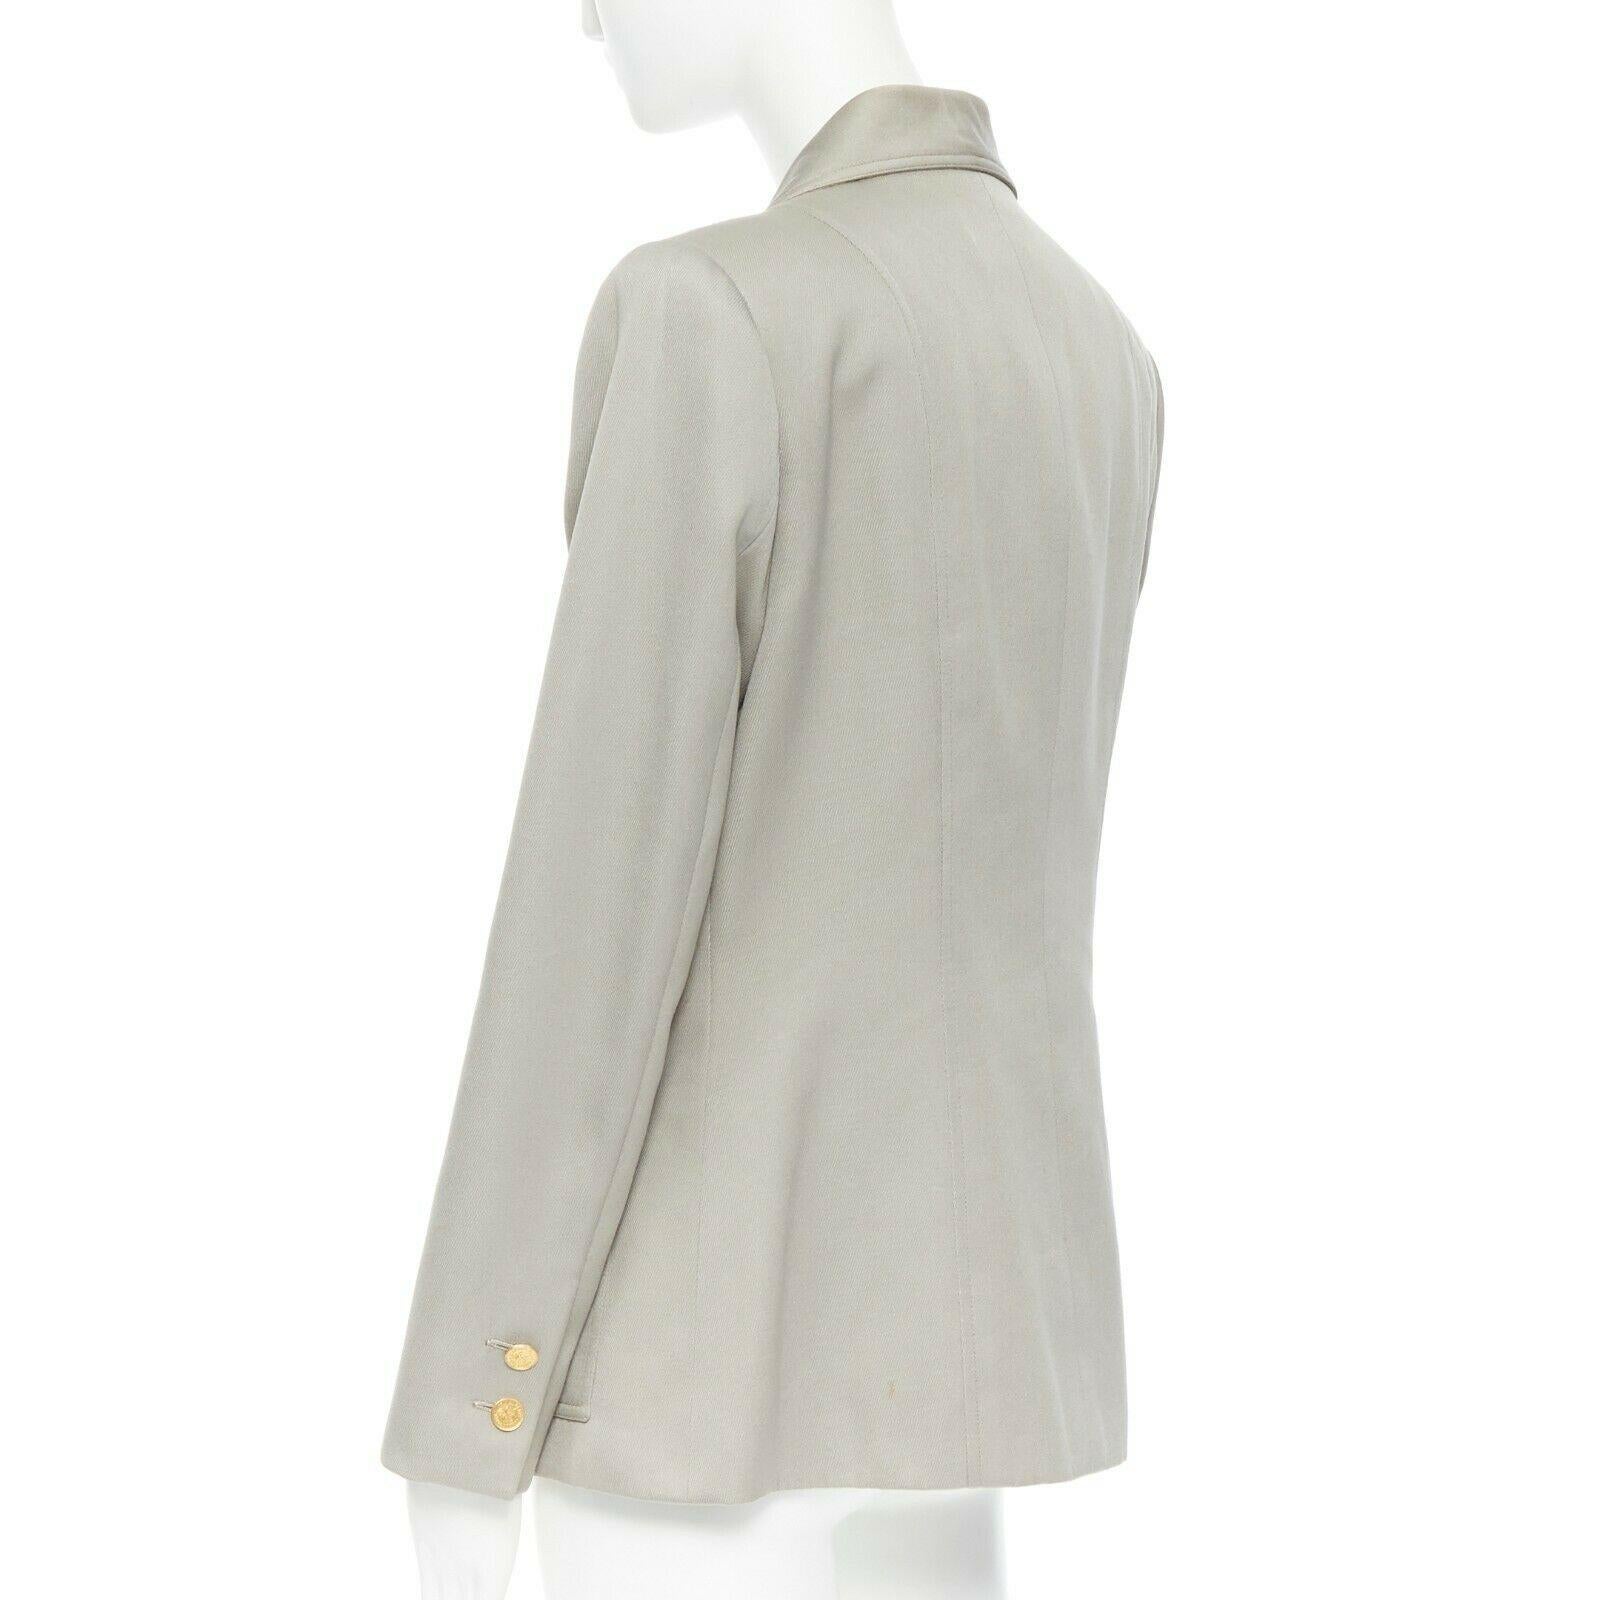 CHANEL Vintage pale grey twill logo button double breast military blazer jacket 1